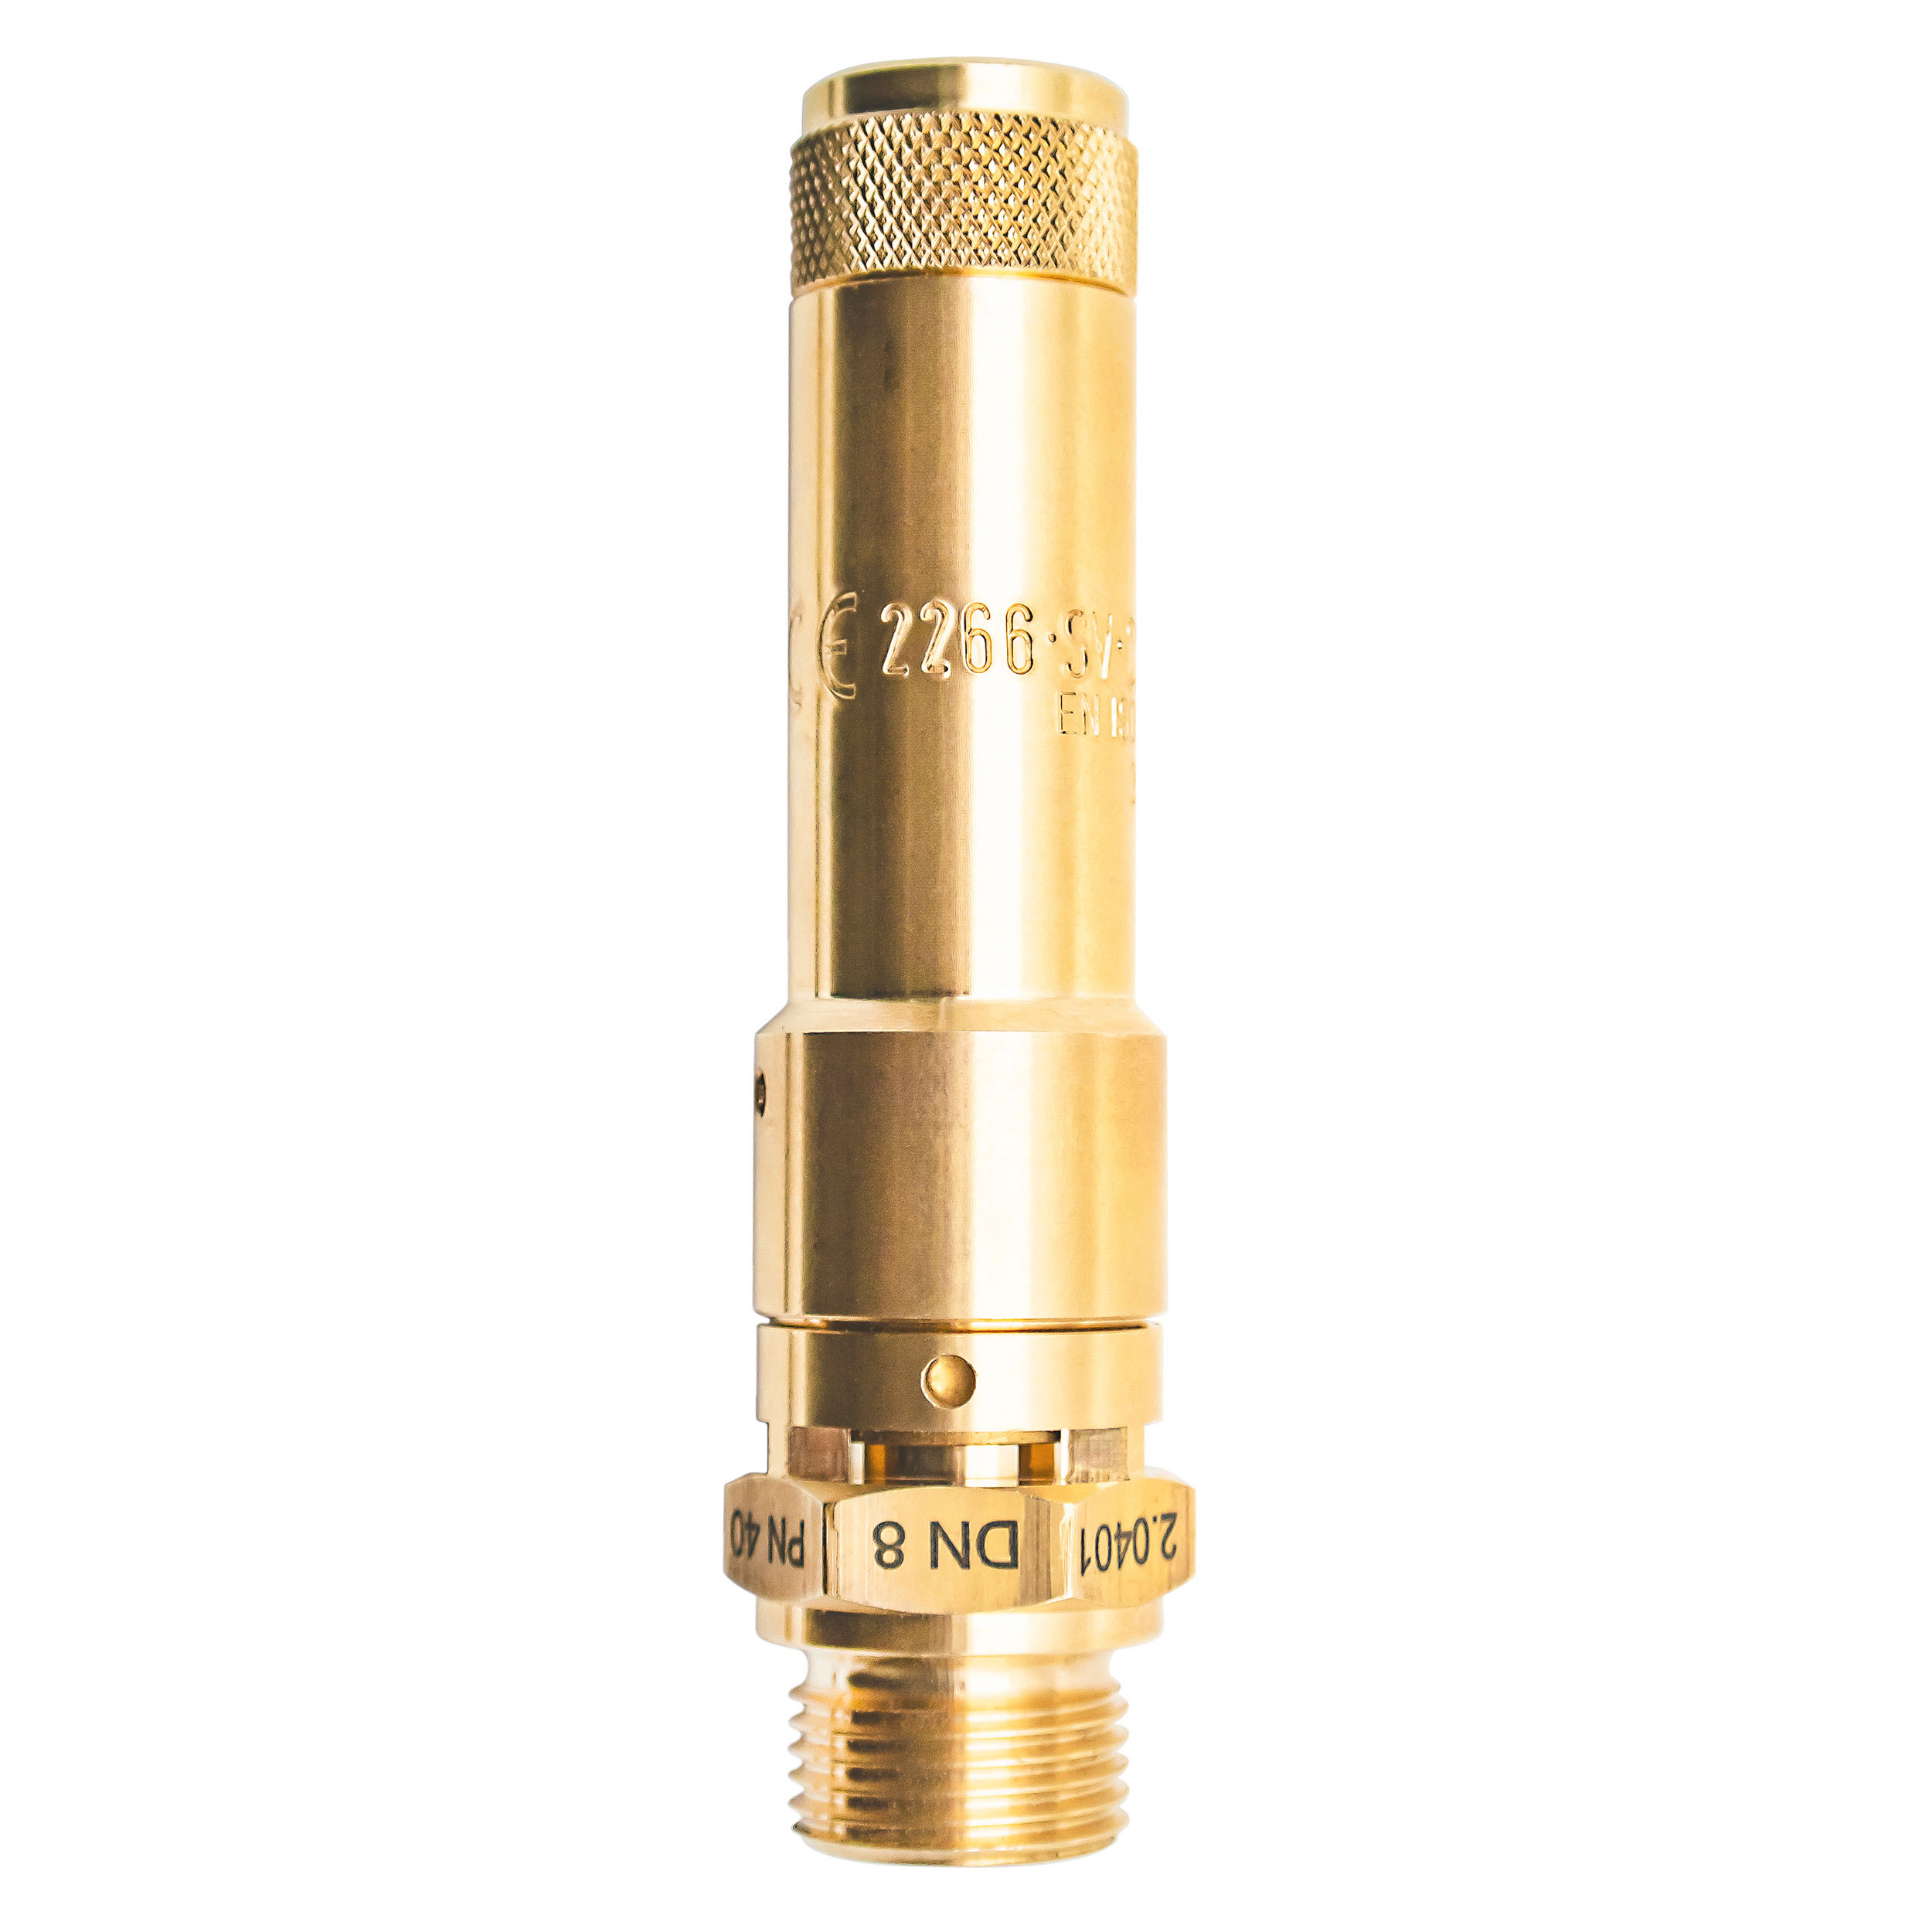 Savety valve component tested DN 8, G¼, set pressure: 23.2 bar (336,4 psi)